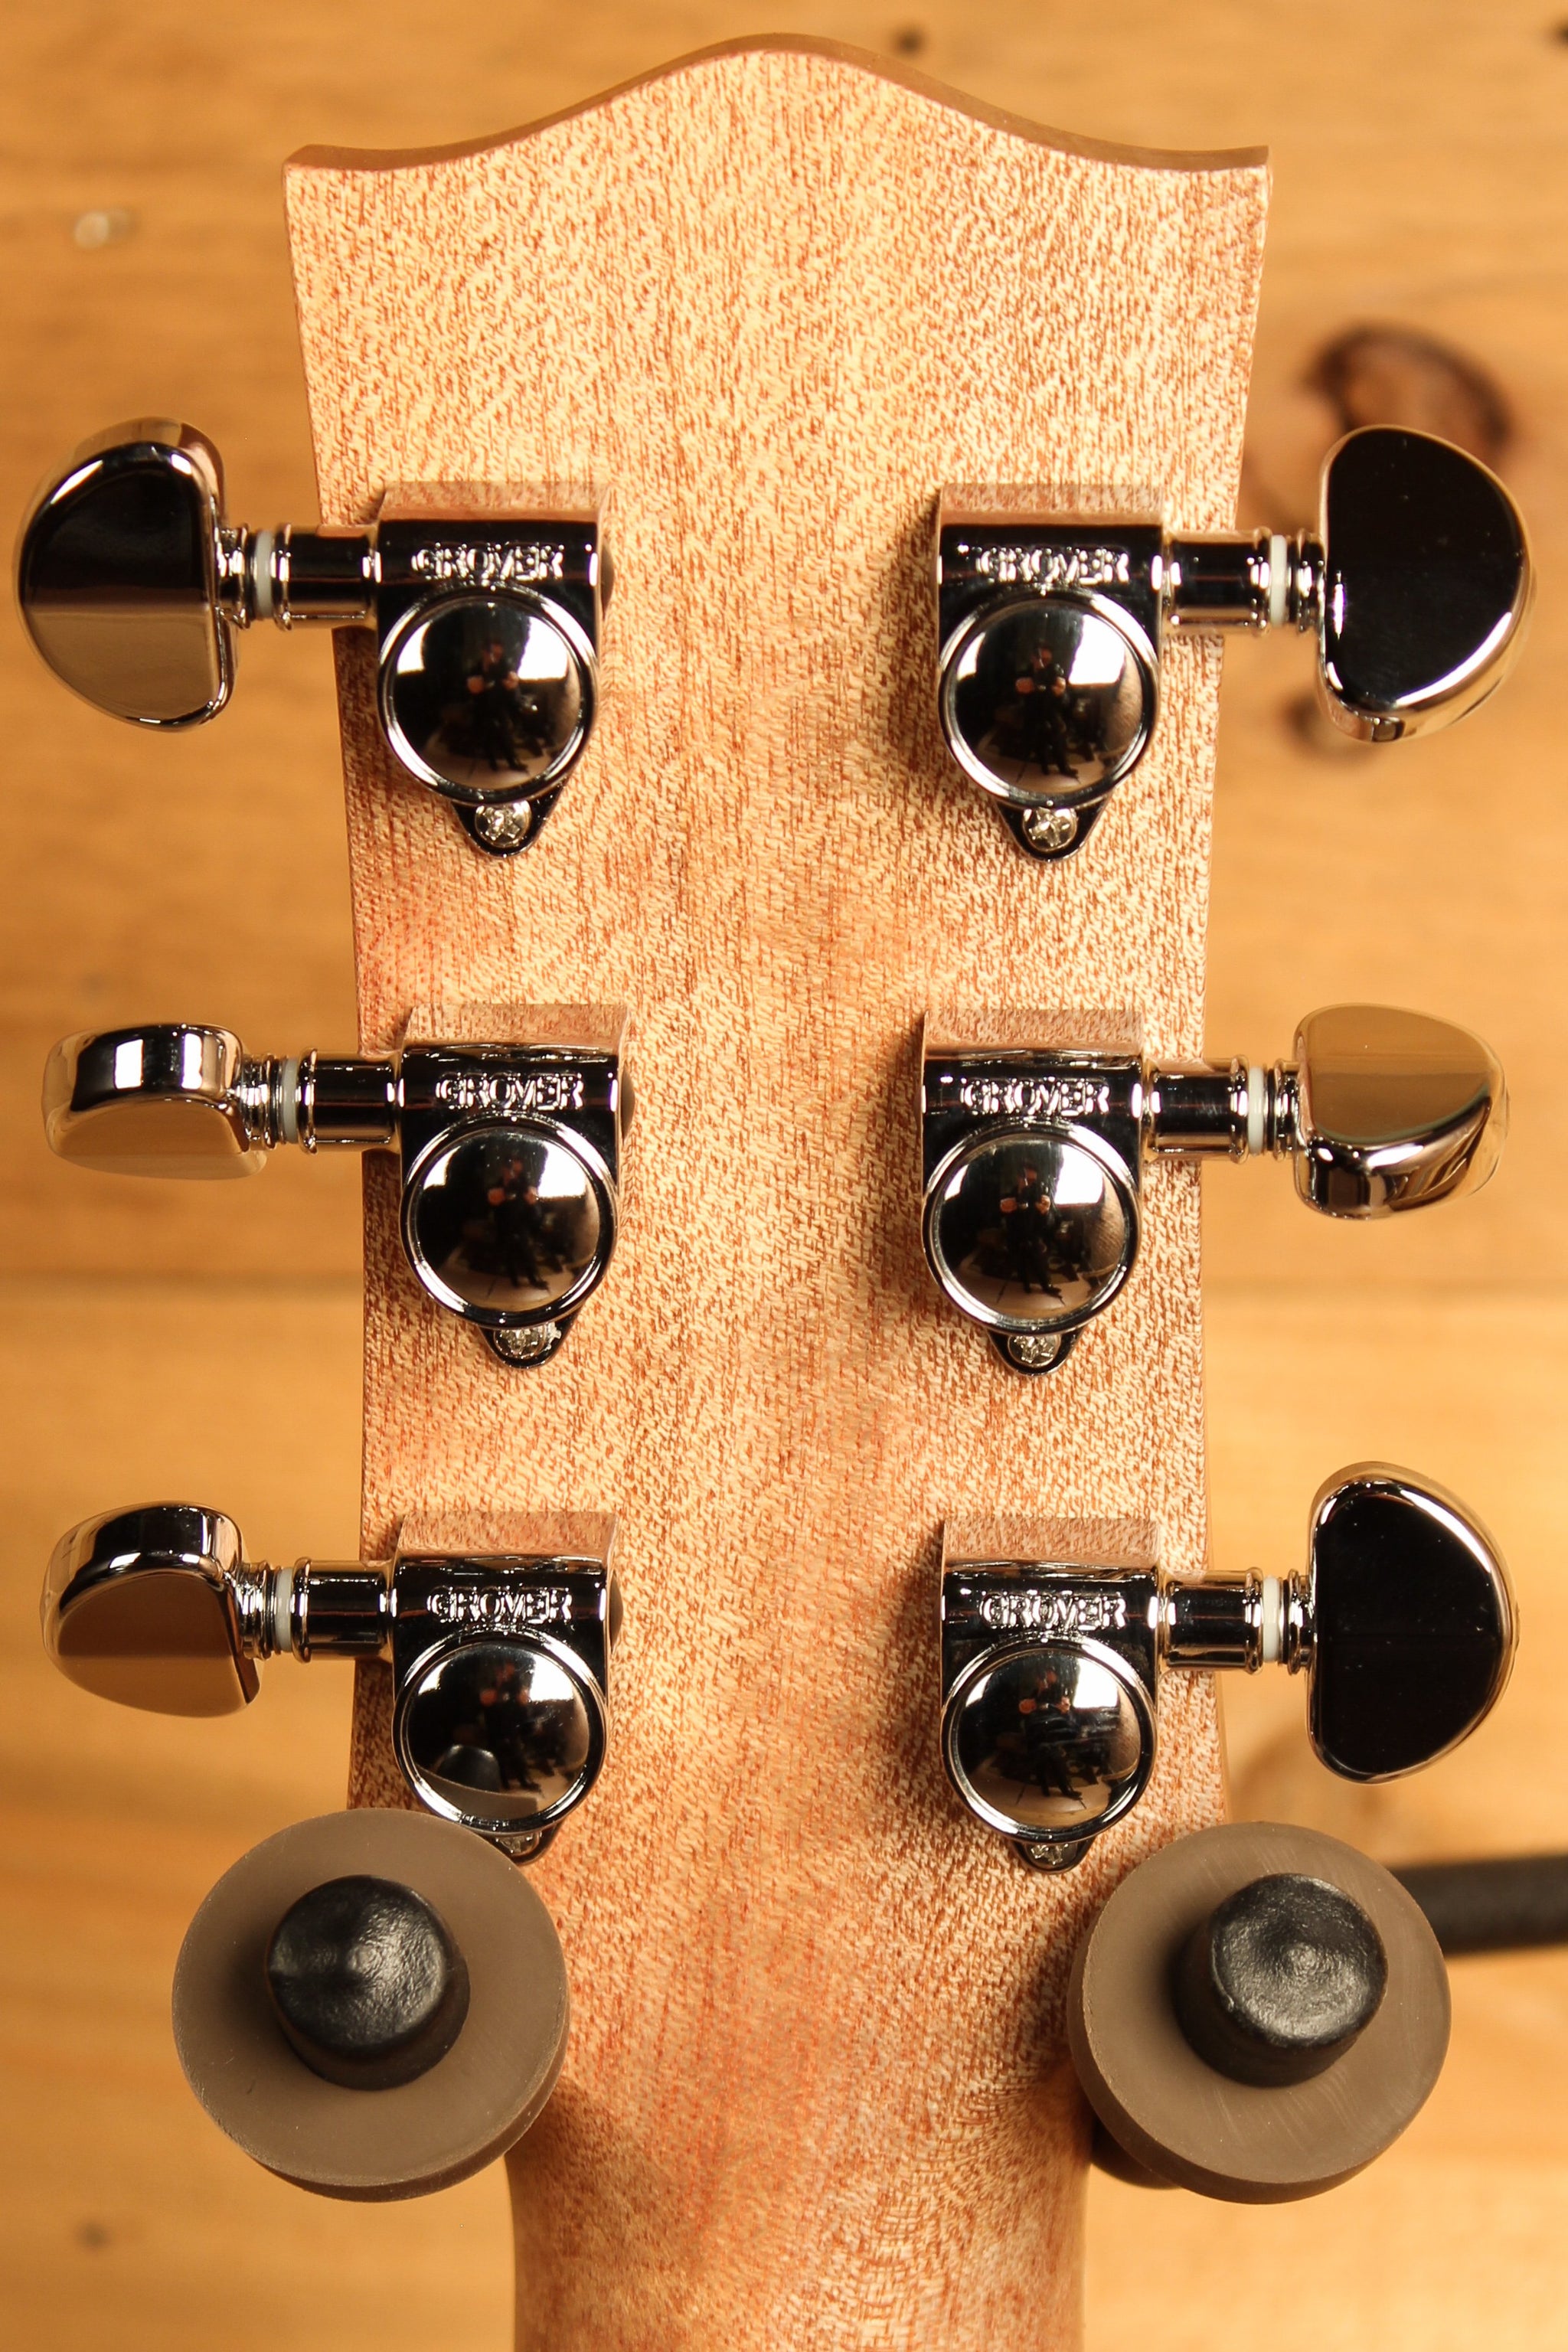 Maton SRS808 Guitar with Western Red Cedar Blackwood and Cutaway ID-13701 - Artisan Guitars